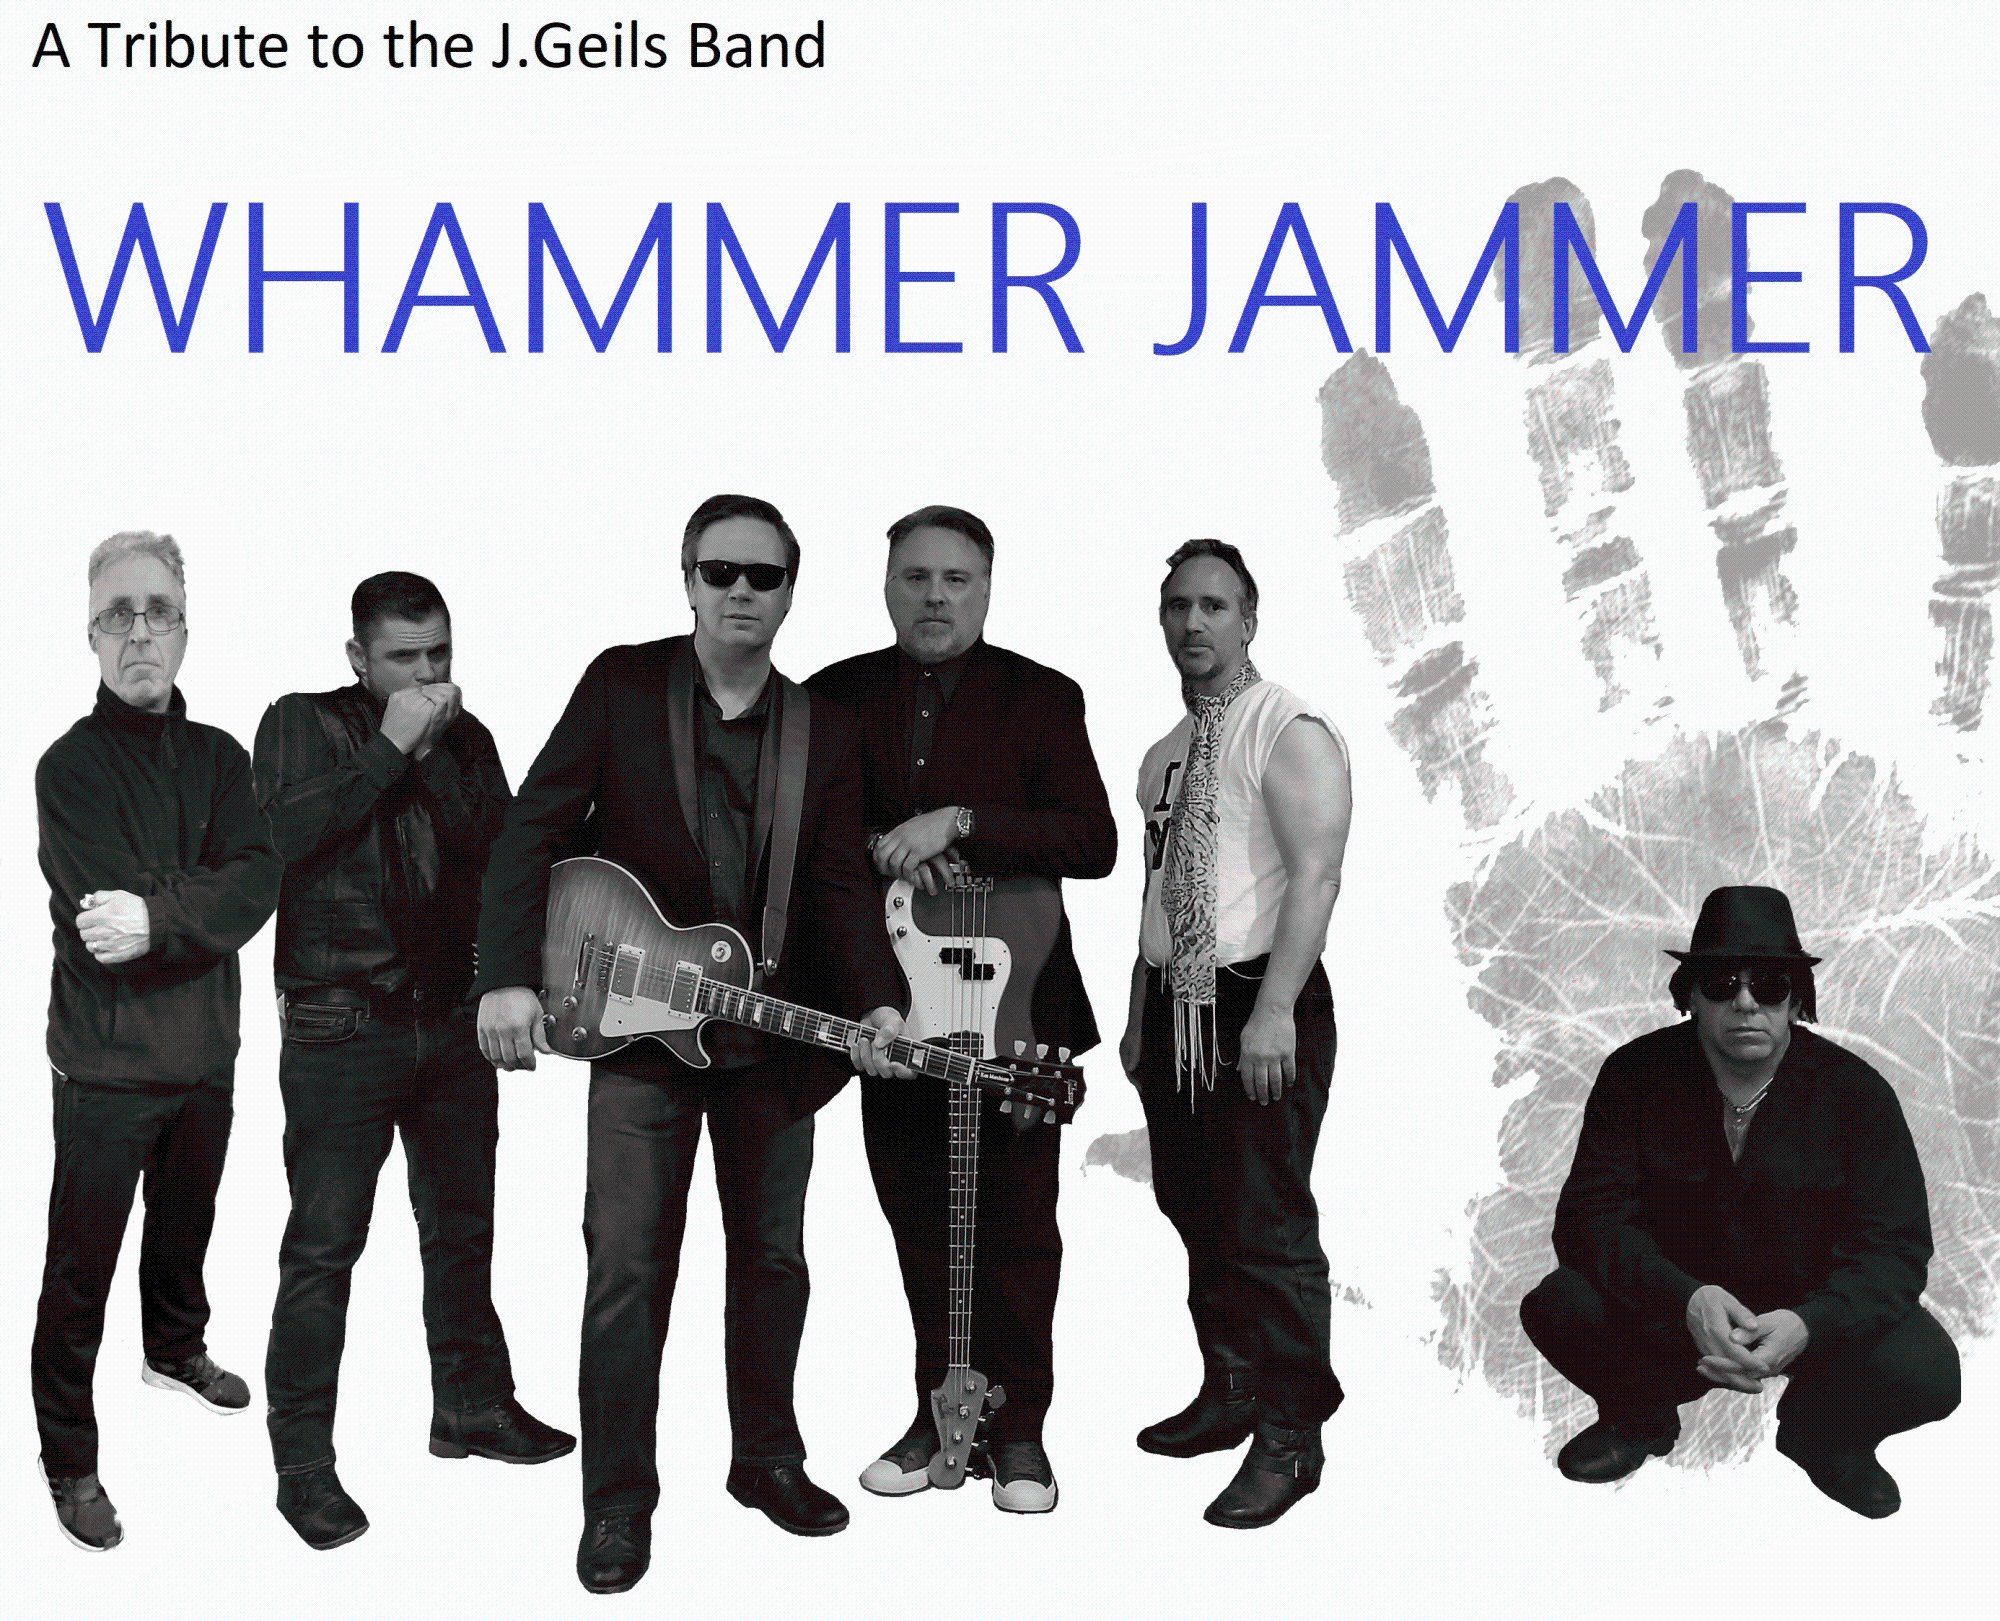 whammer jammer meaning